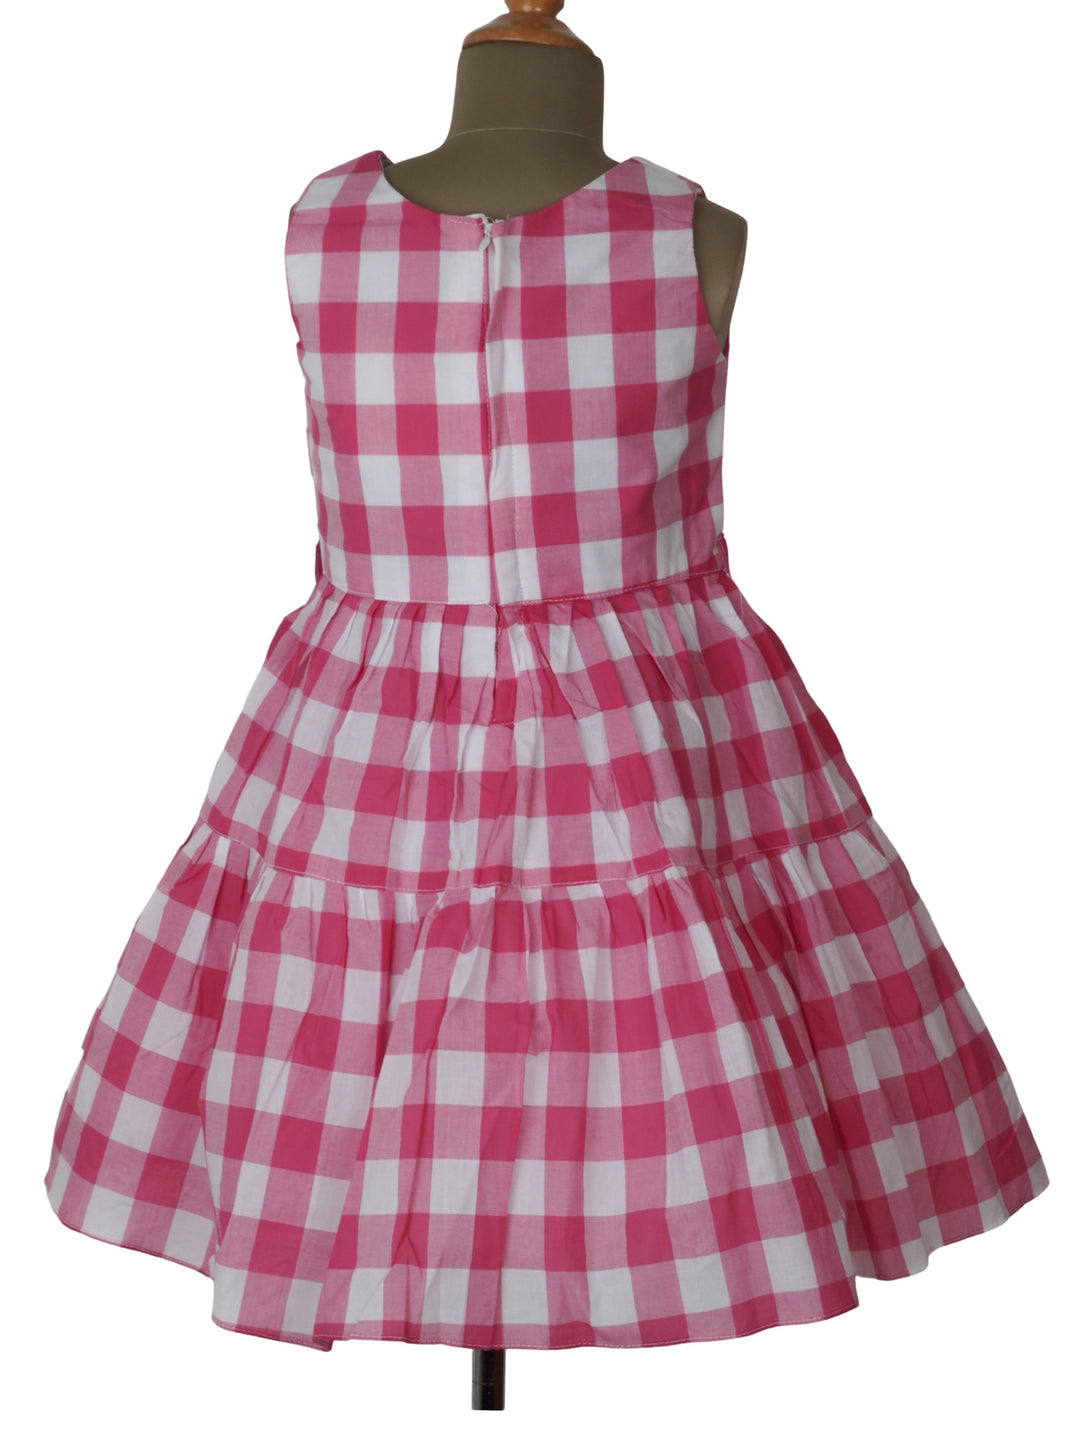 The Nesavu Frocks & Dresses Pink & White Checked Fullflair Cotton Dress For Little ones psr silks Nesavu 16 (1Y-2Y) / medium violet red GFC424